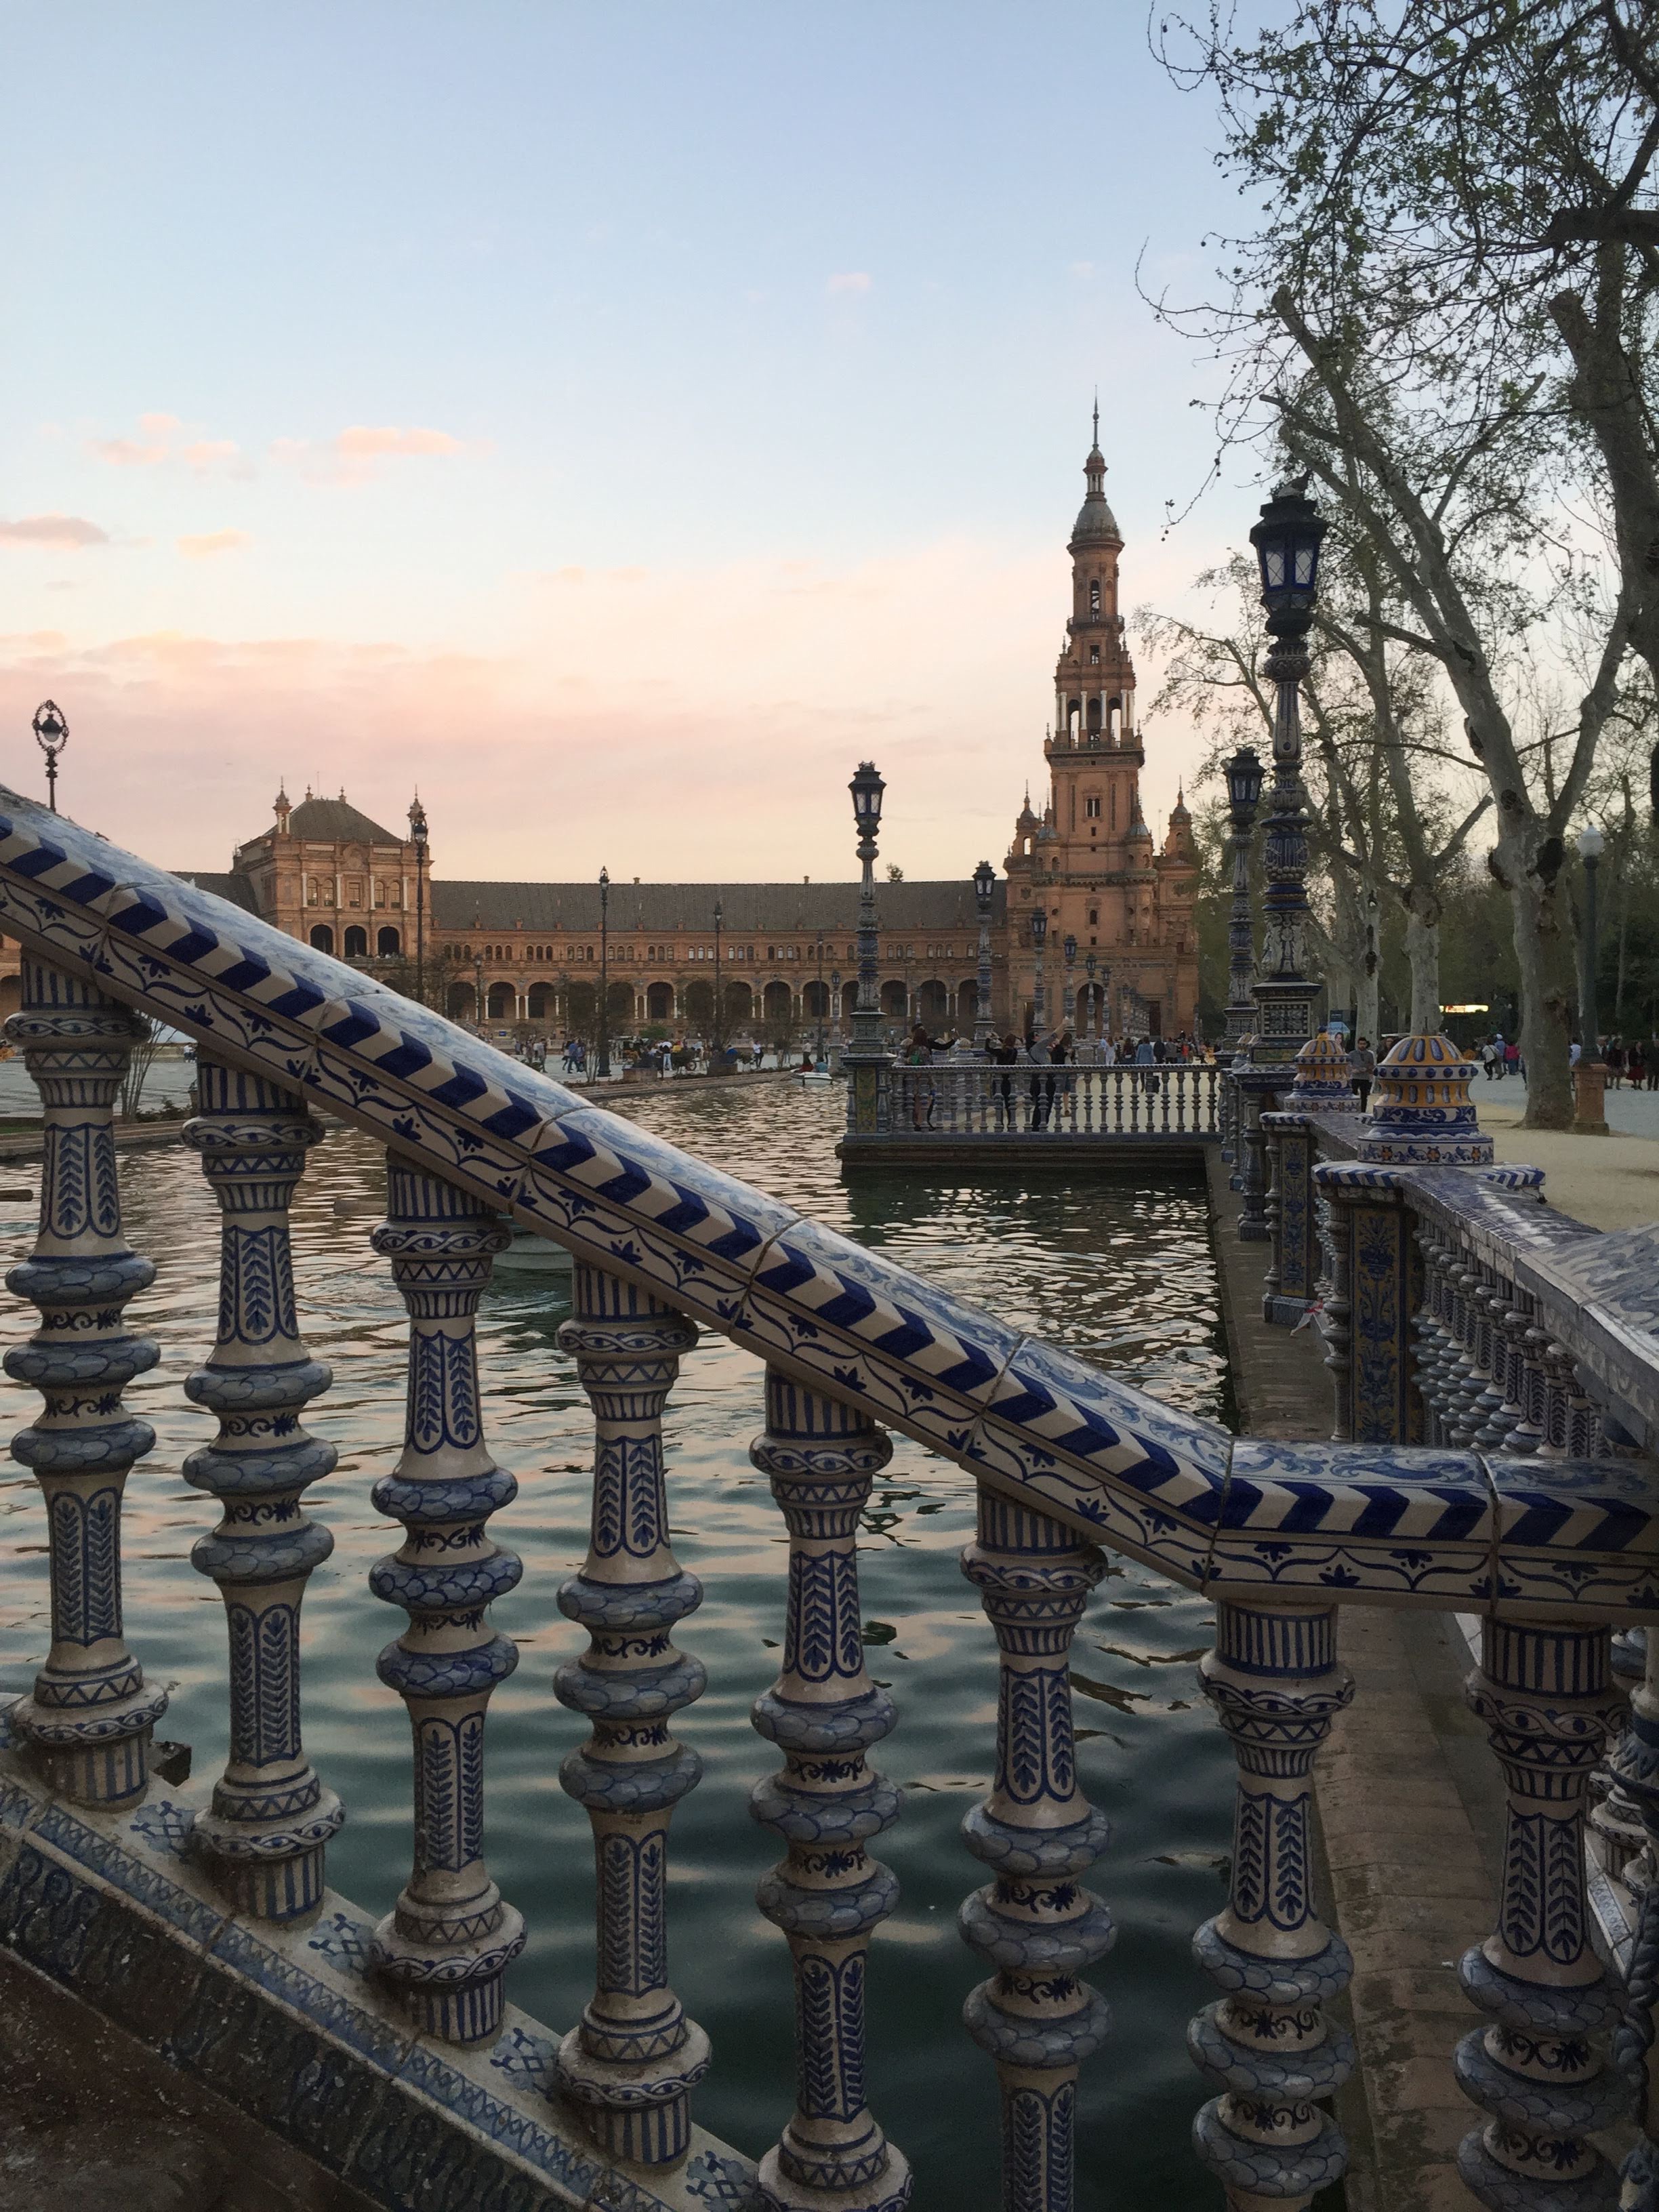 View of the Plaza De Espana in Seville, Spain.